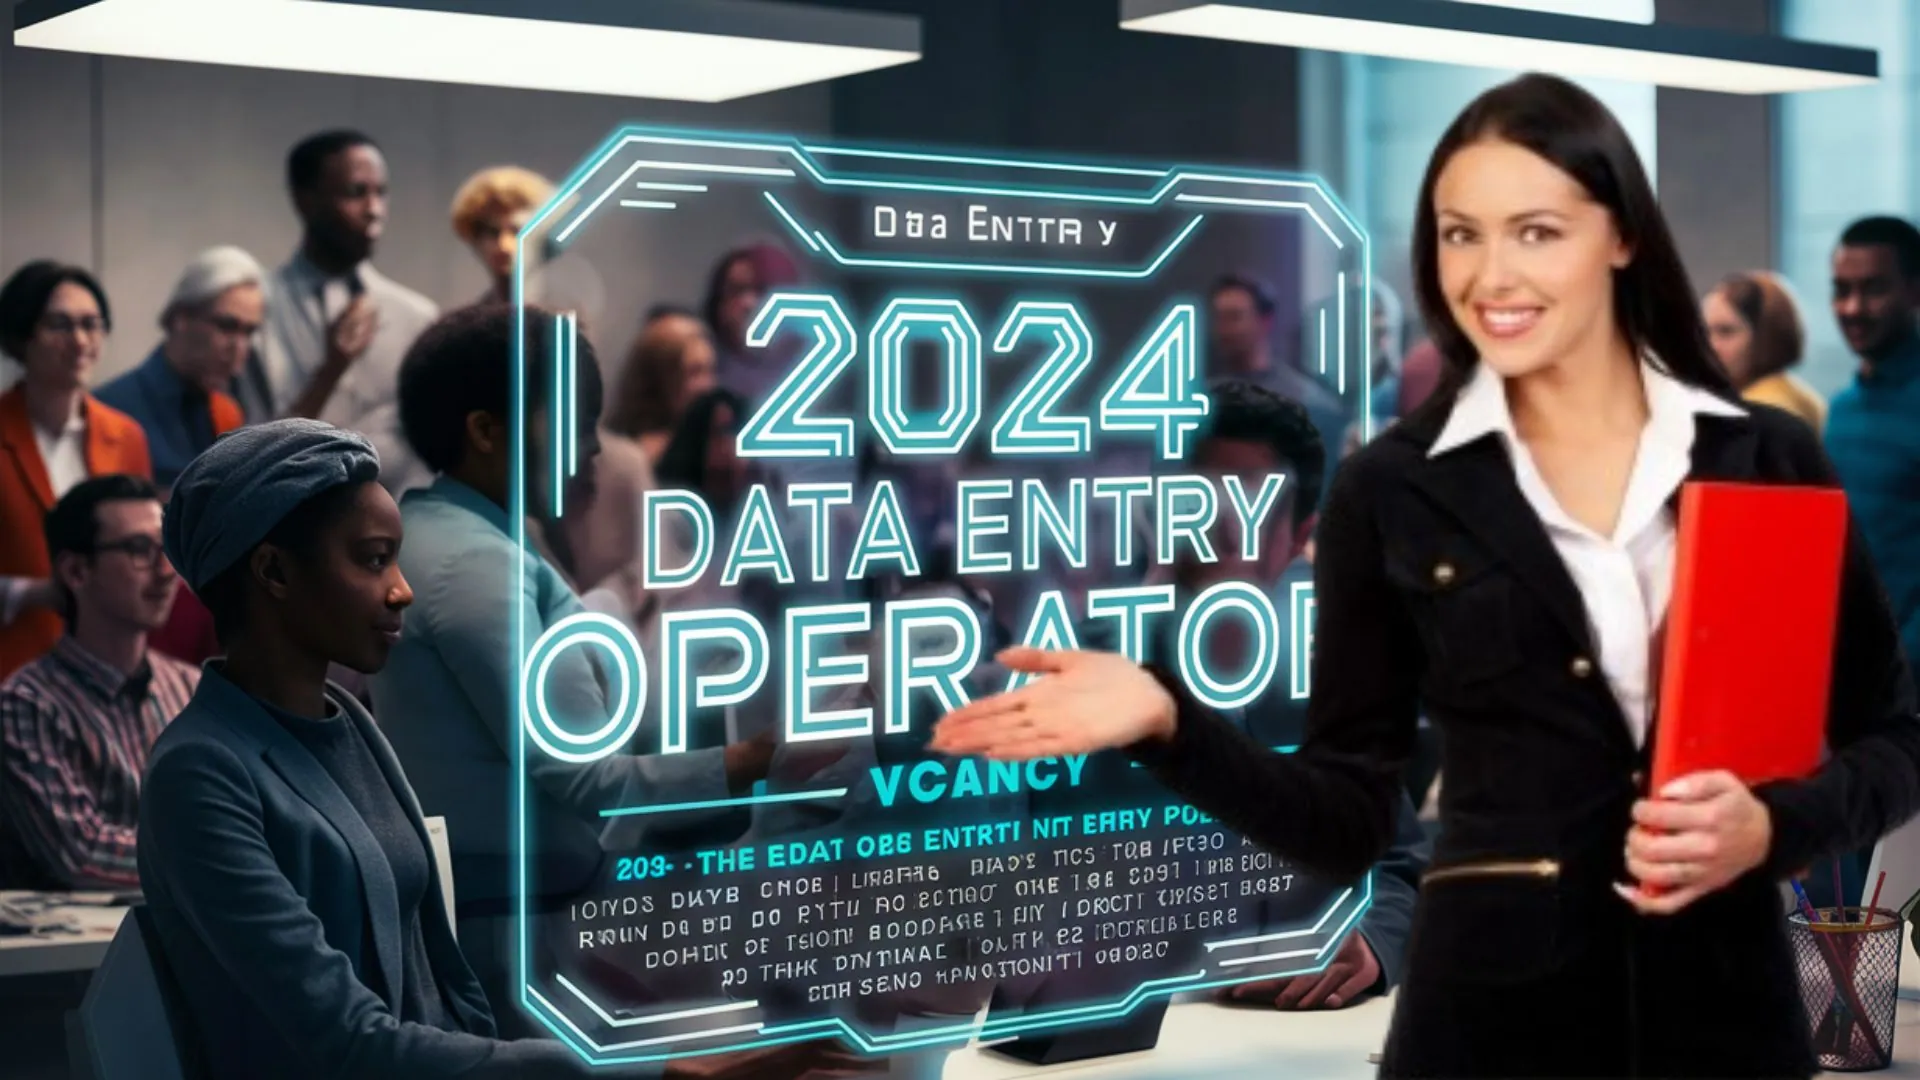 Data Entry Operator Vacancy